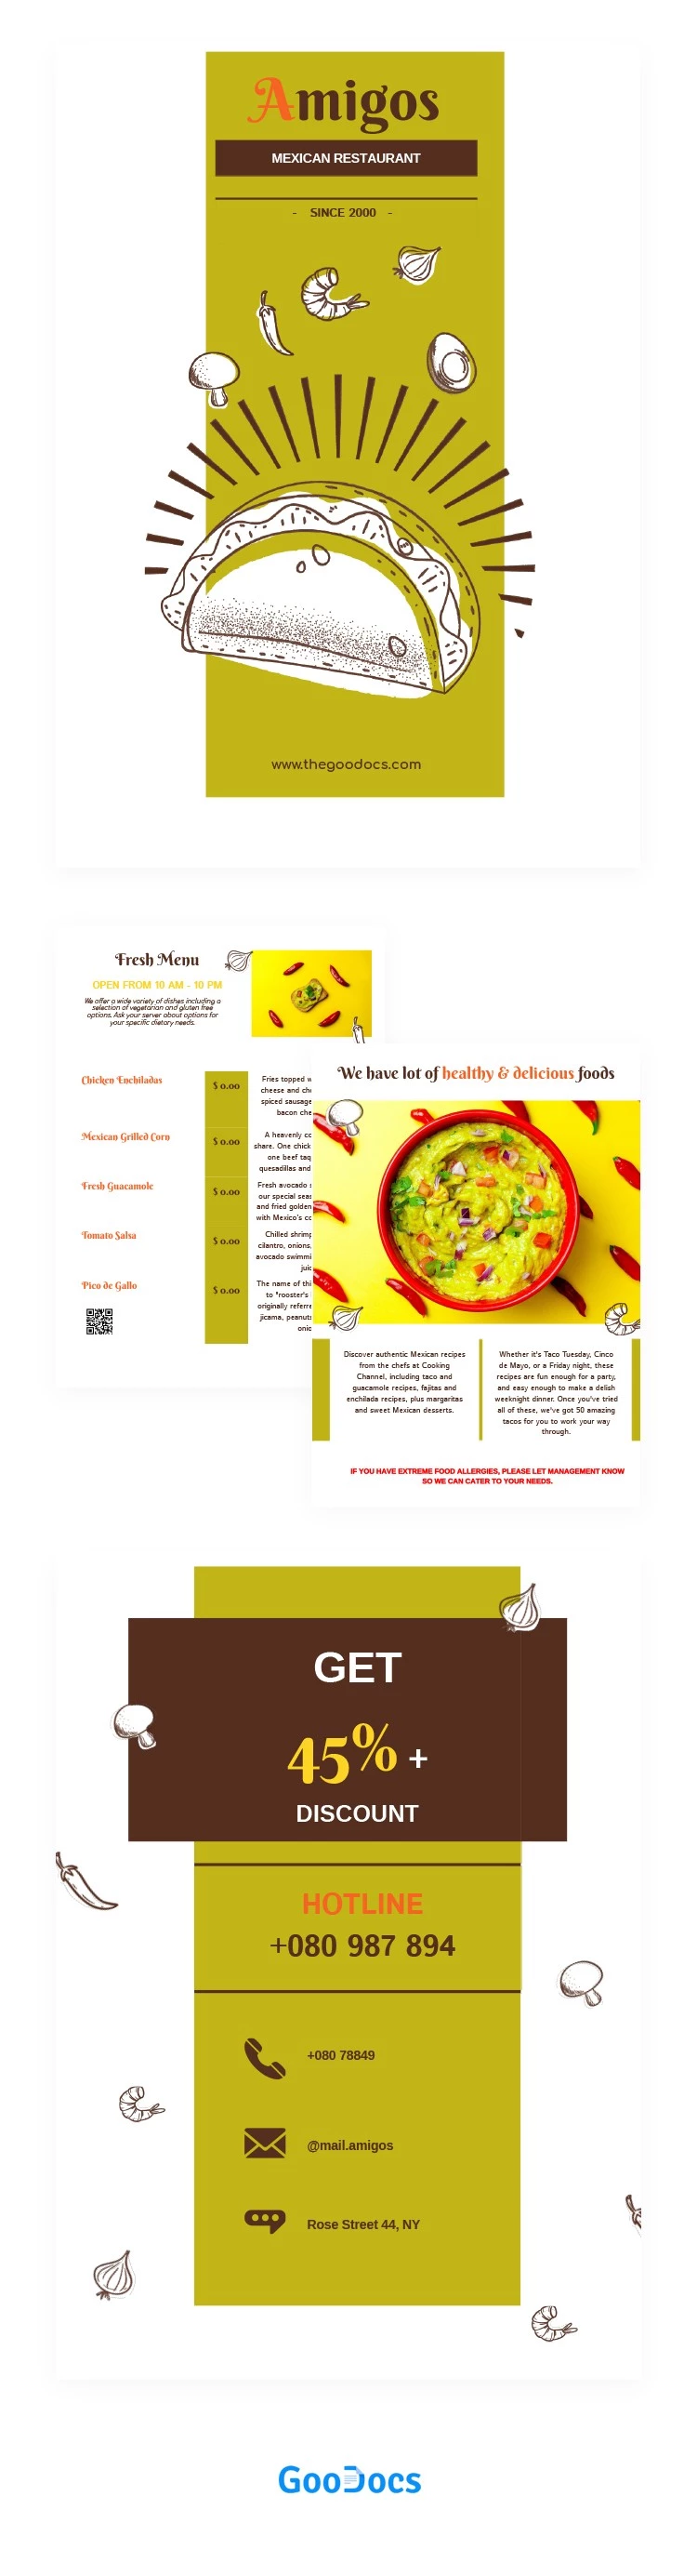 Brochure du restaurant mexicain - free Google Docs Template - 10061949